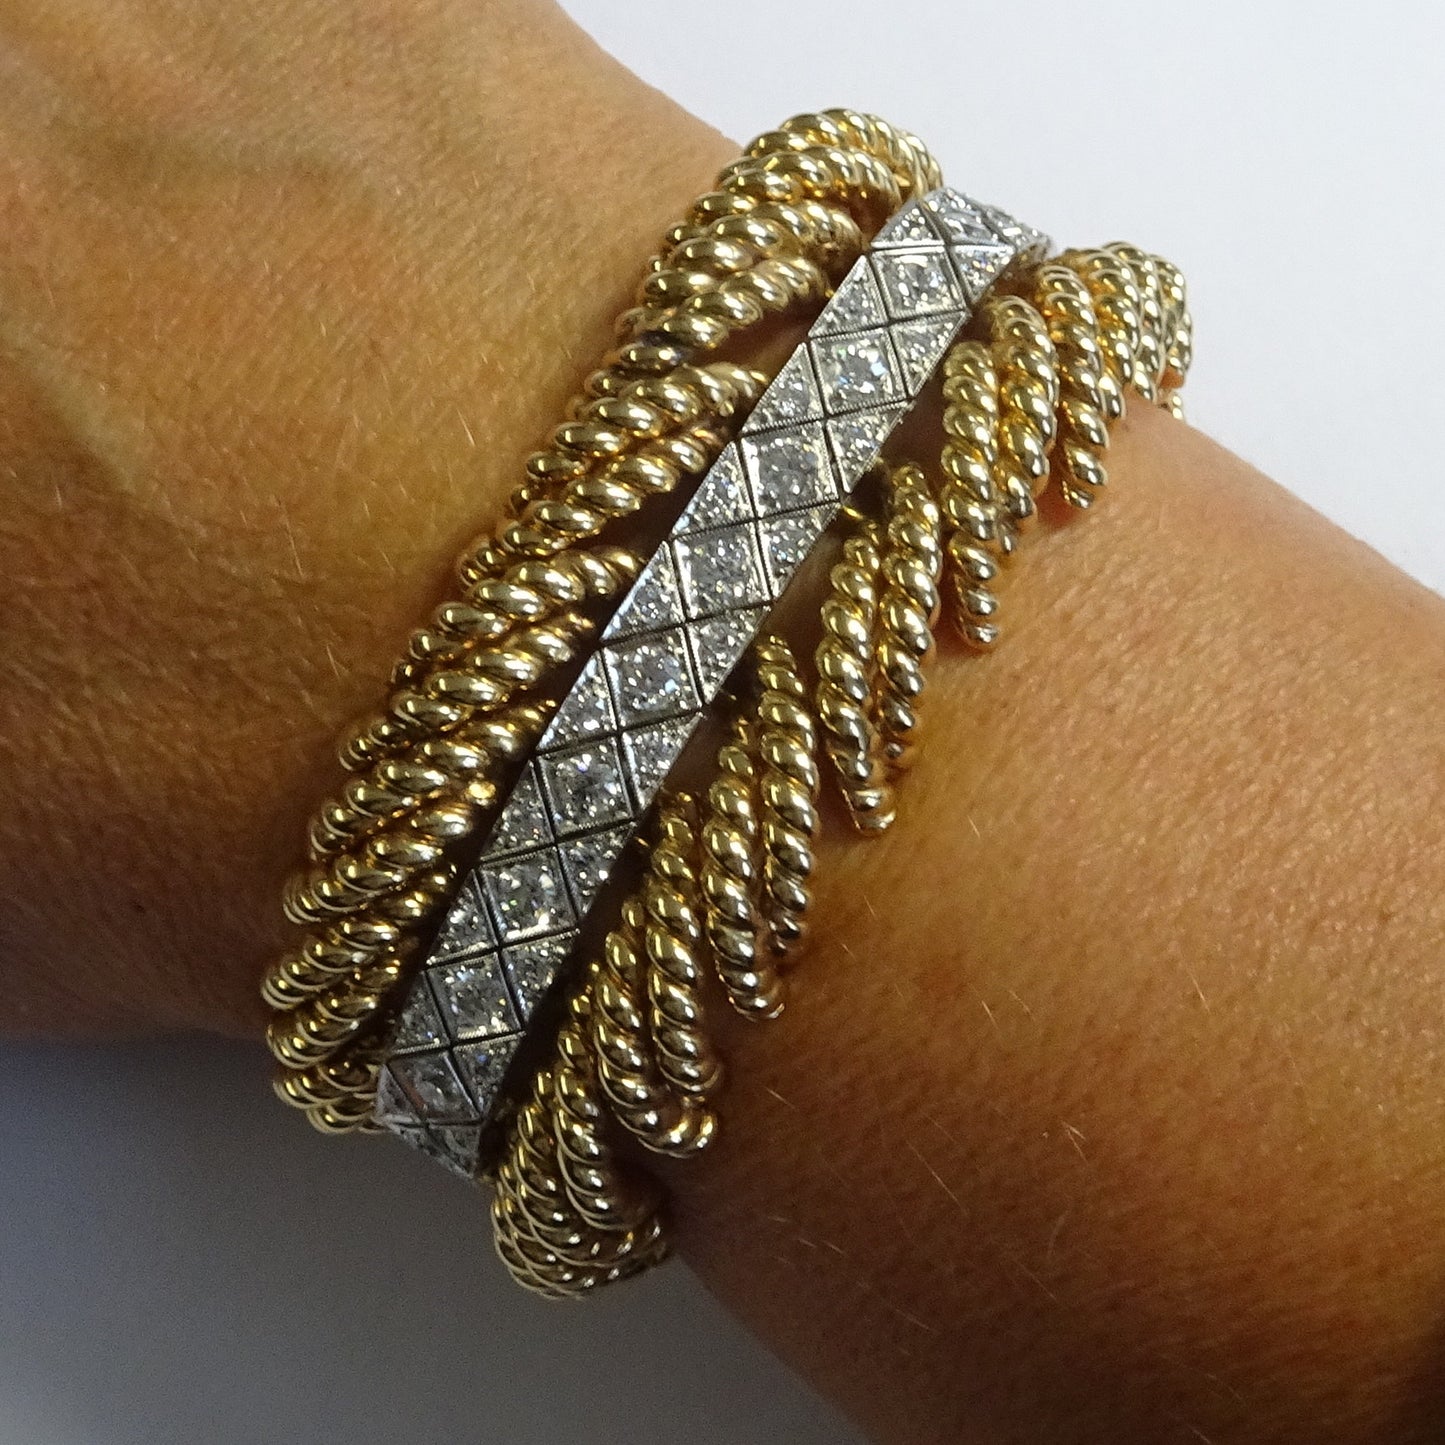 Fulco Di Verdura 1940s 18KT Yellow Gold & Platinum Diamond Bracelet on wrist